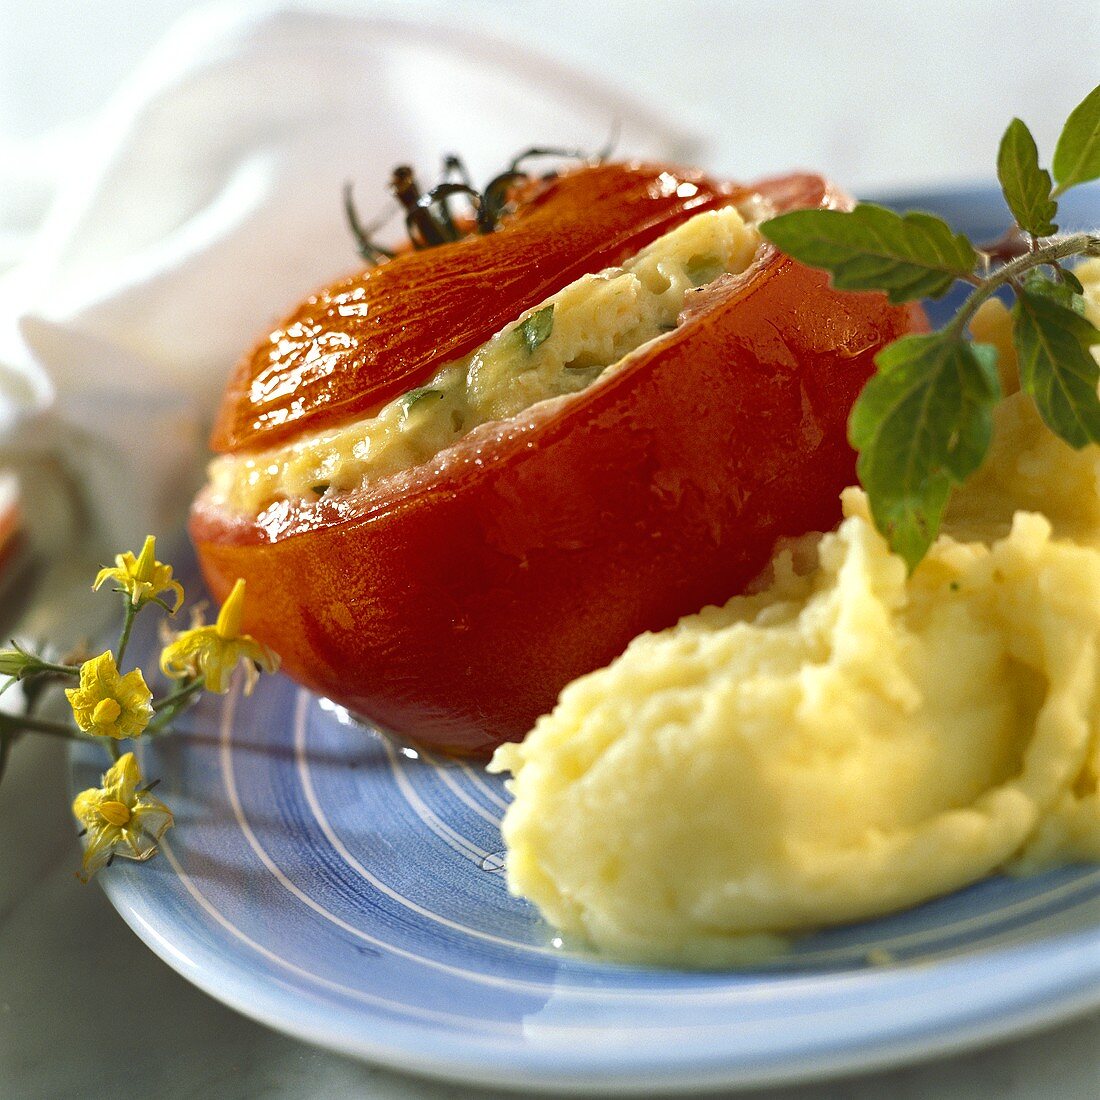 Stuffed tomatoes with ramsons (wild garlic) & mashed potato